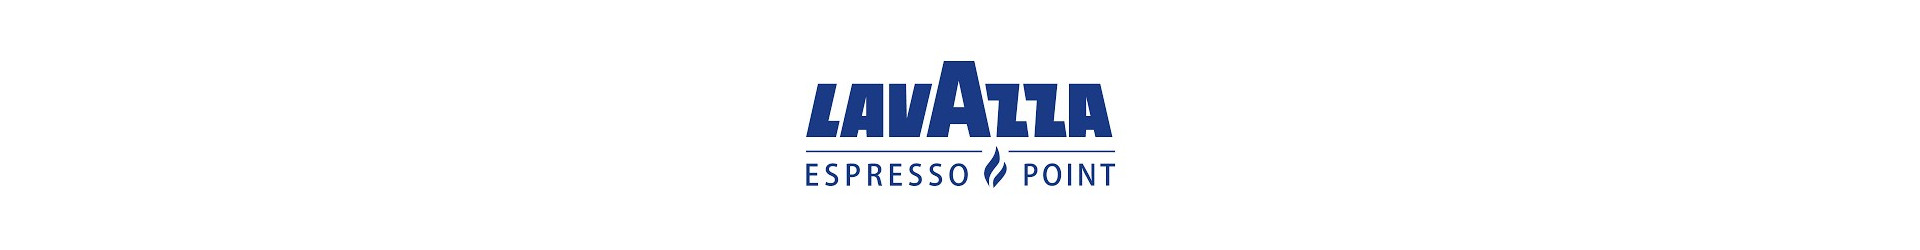 Originali Espresso Point